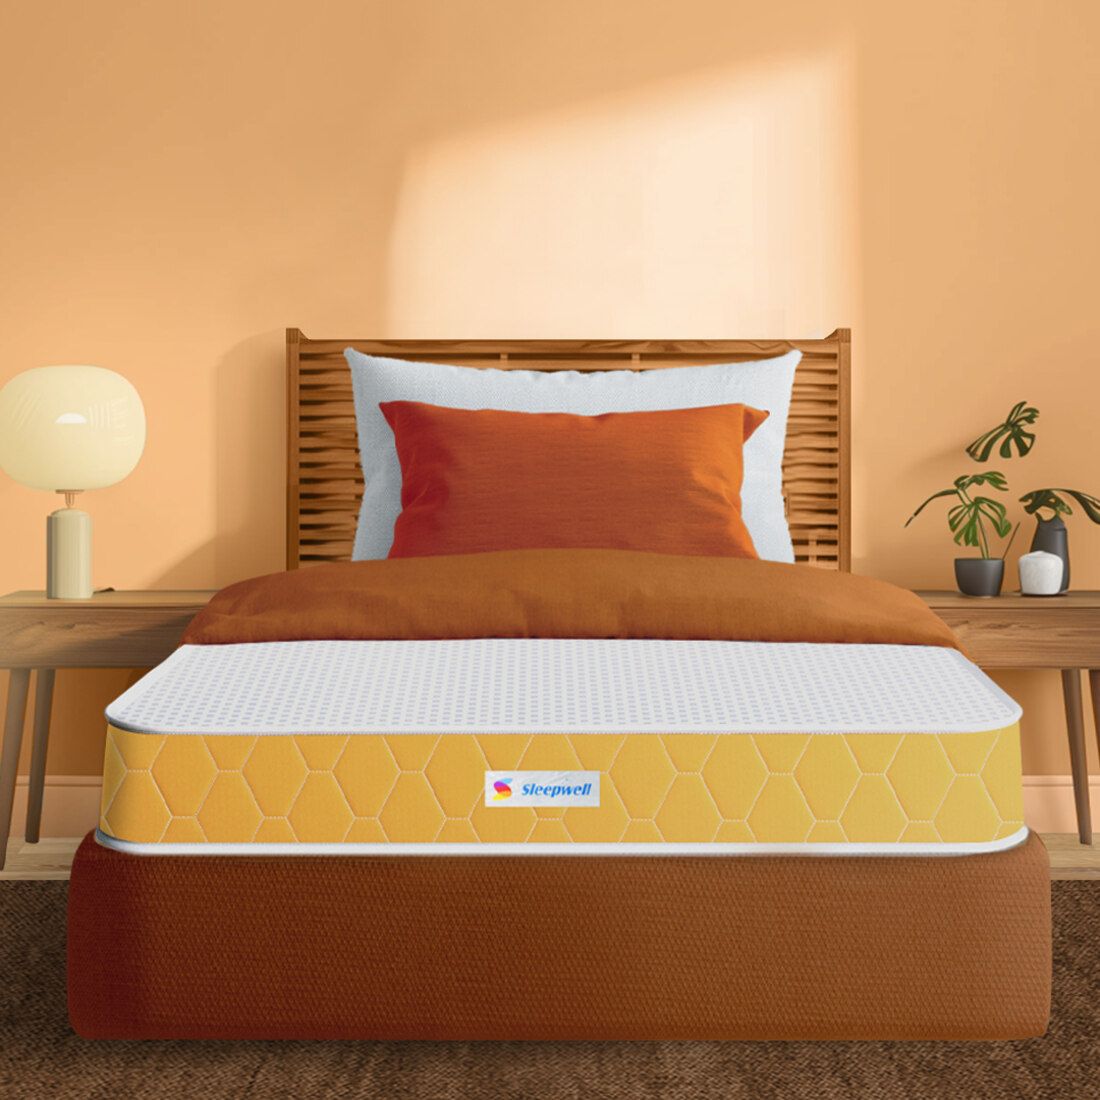 Sleepwell Dual Mattress | Reversible | High Density (HD) Foam | 8-inch Single Bed Size,?Medium Soft & Hard (Orange,72x42X8)